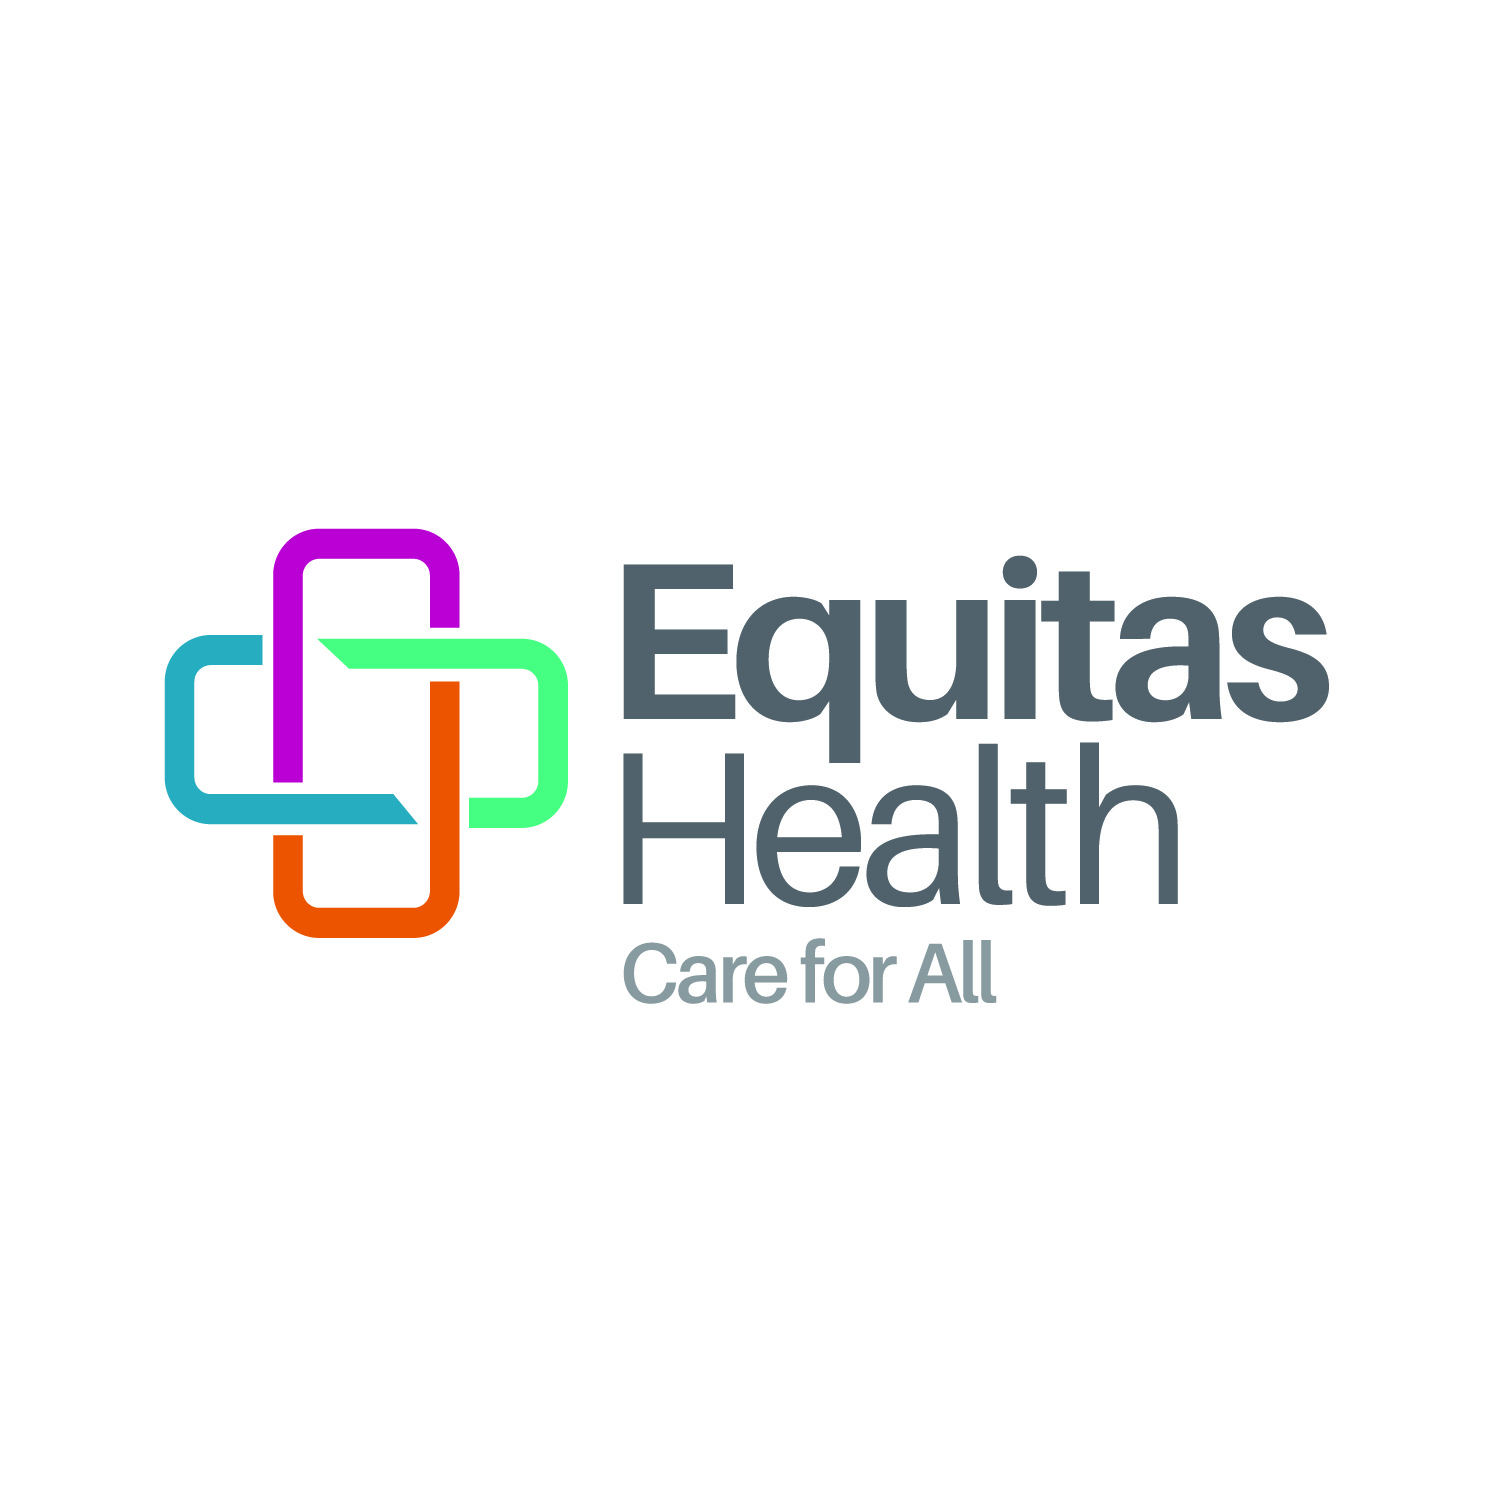 Equitas Health Logo 23.jpg (161 kb)